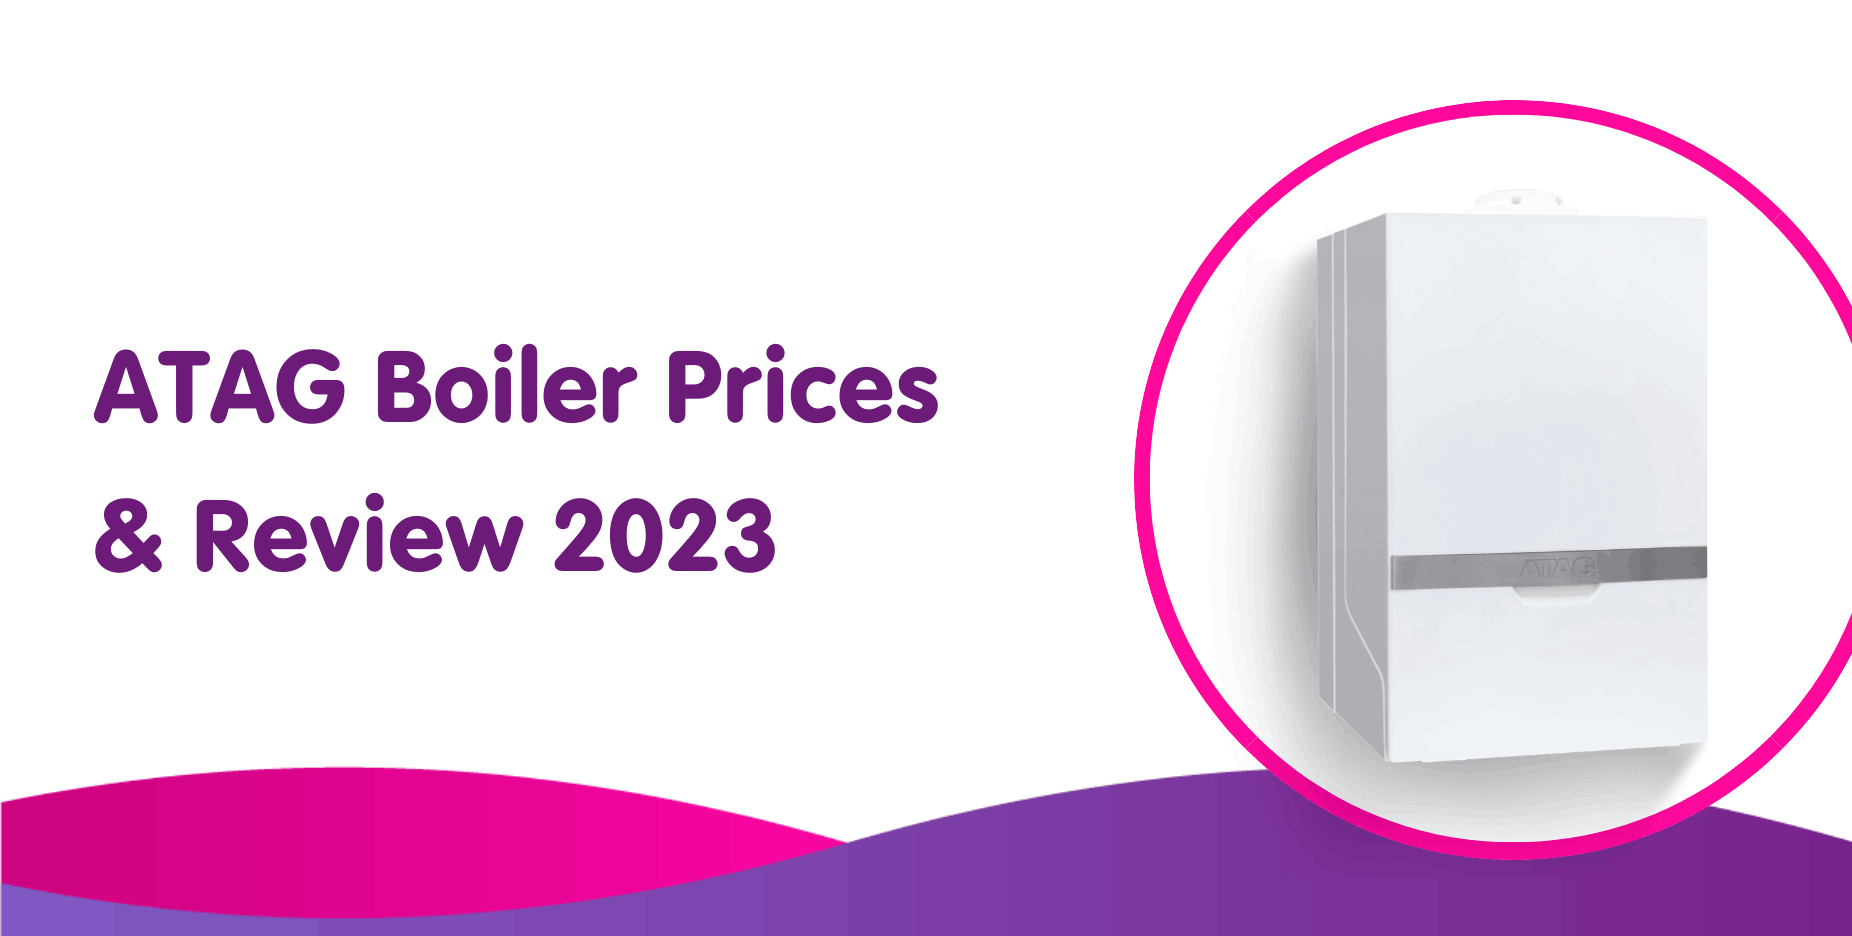 ATAG Boiler Prices & Review 2023